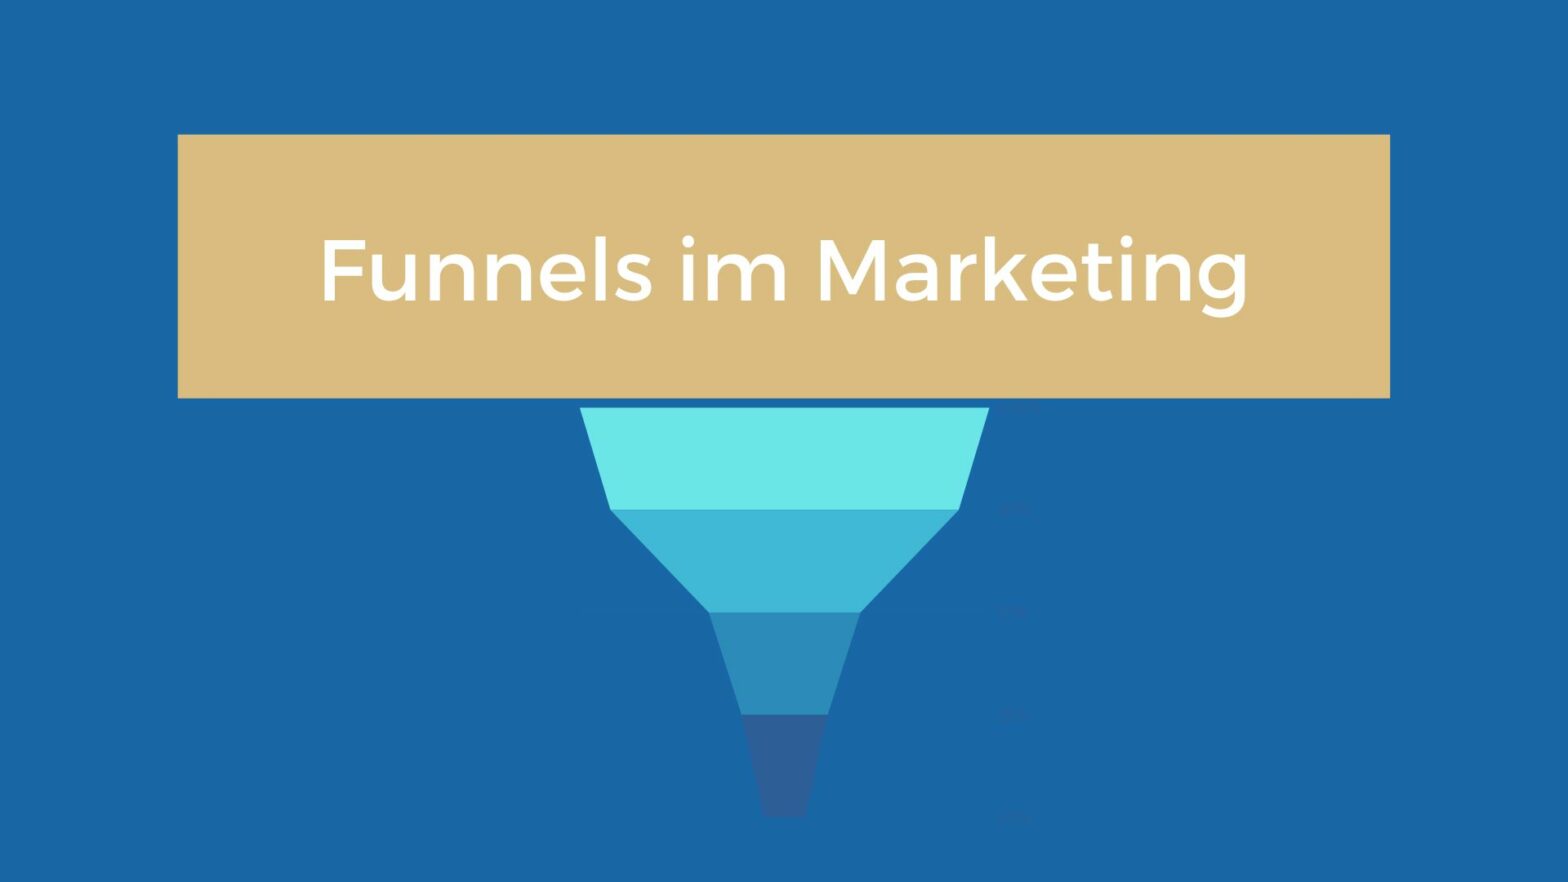 Funnels im Marketing - Growth Hacking - freshestweb